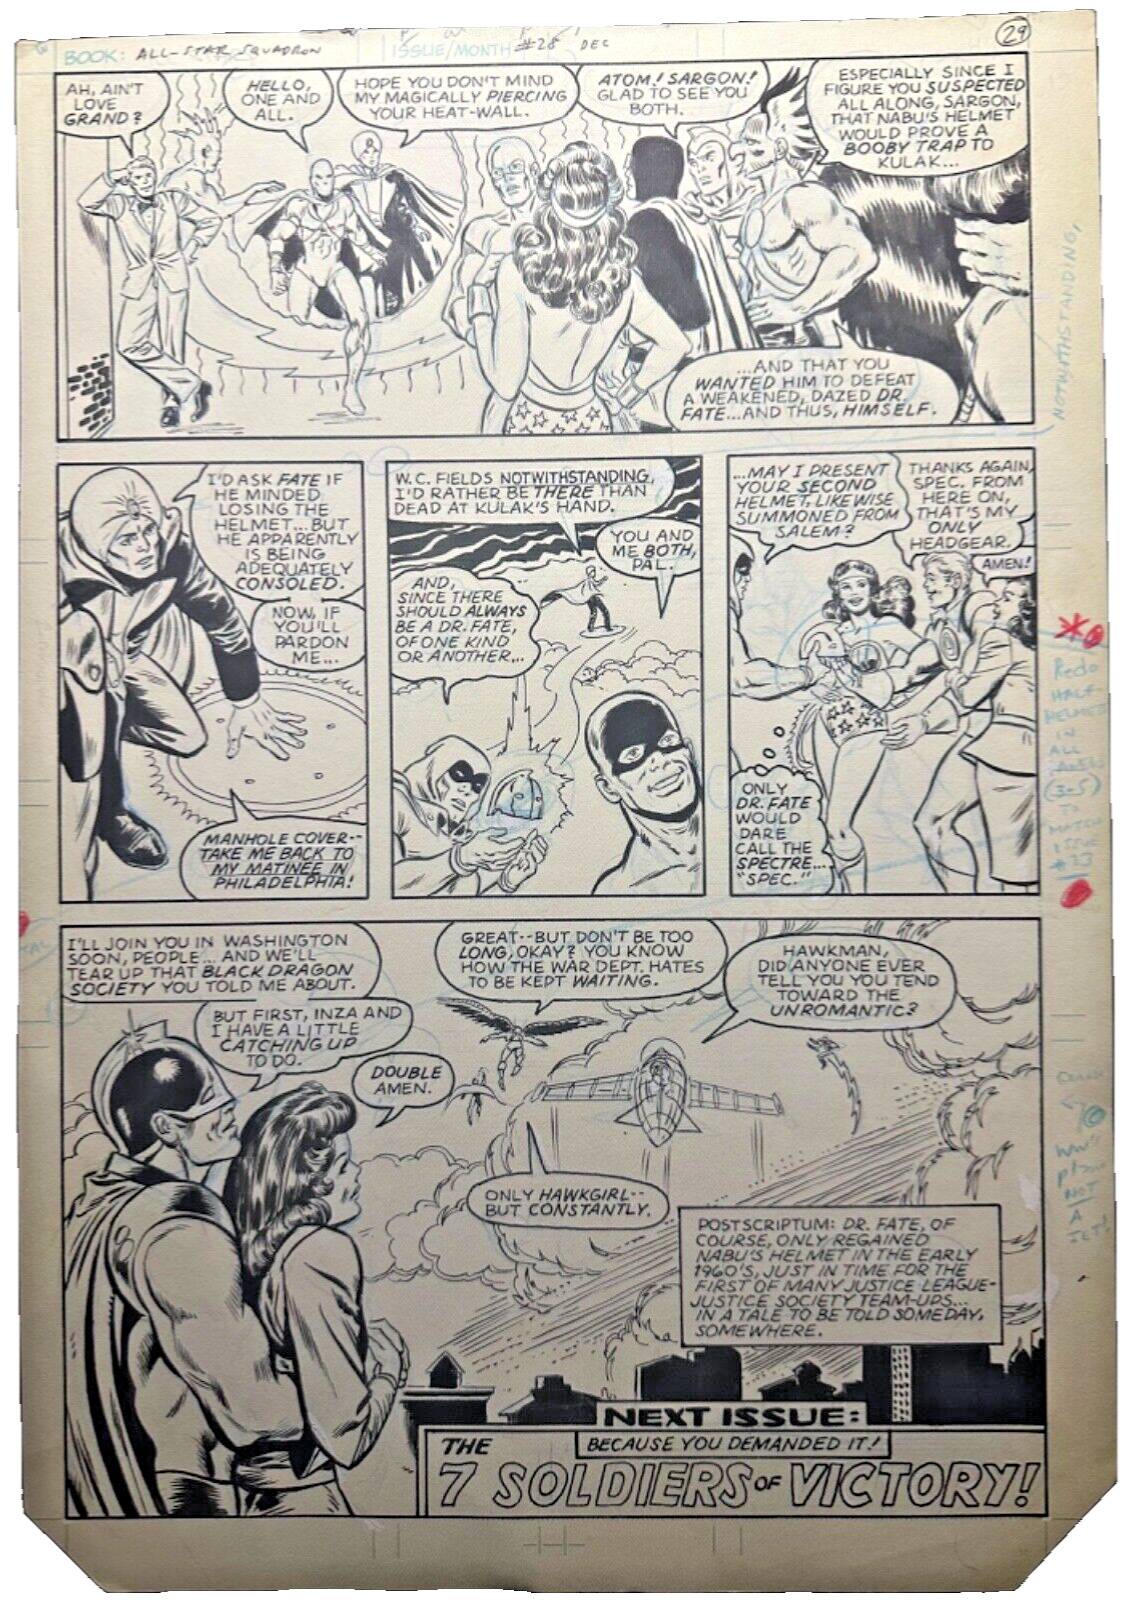 ALL STAR SQUADRON # 28 ,DC COMIC ORIGINAL ART , BRONZE AGE ,SPLASH PAGE.